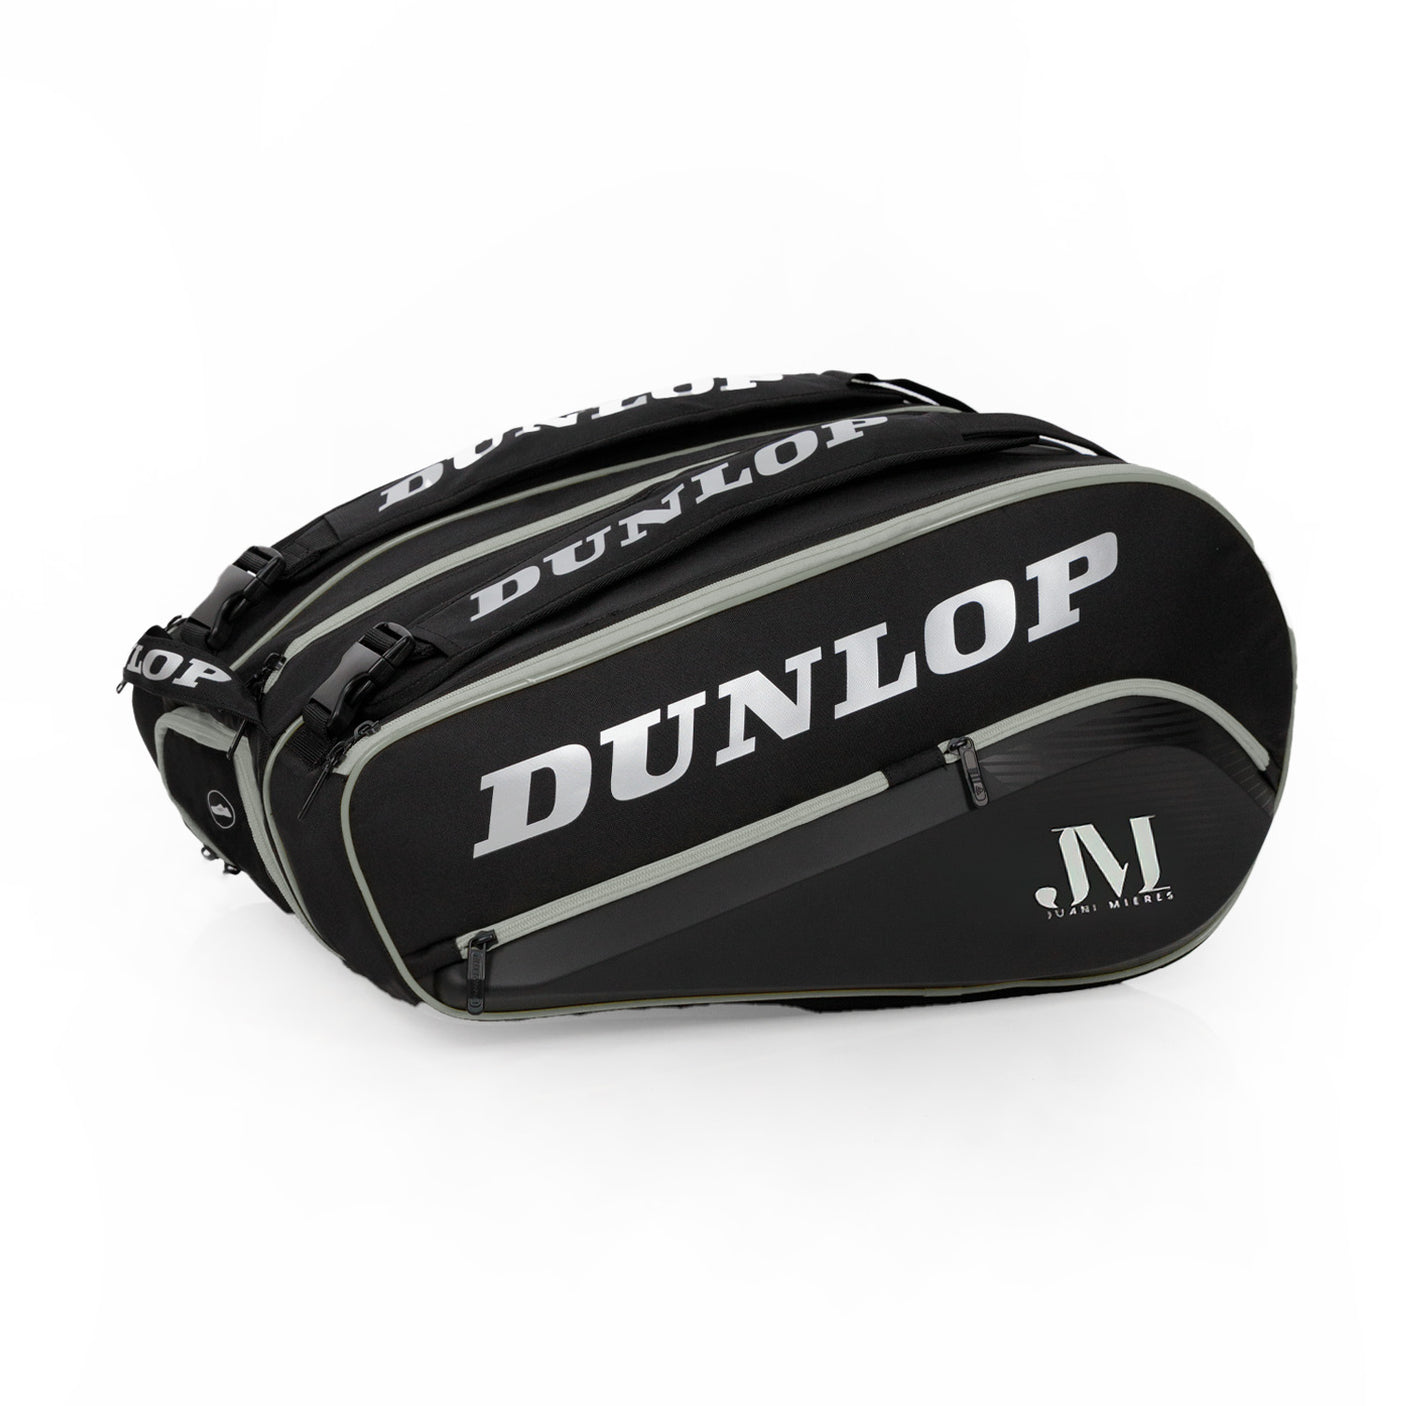 Dunlop Elite Thermo 2.0 Padel Bag By Juani Mieres - Black & Silver